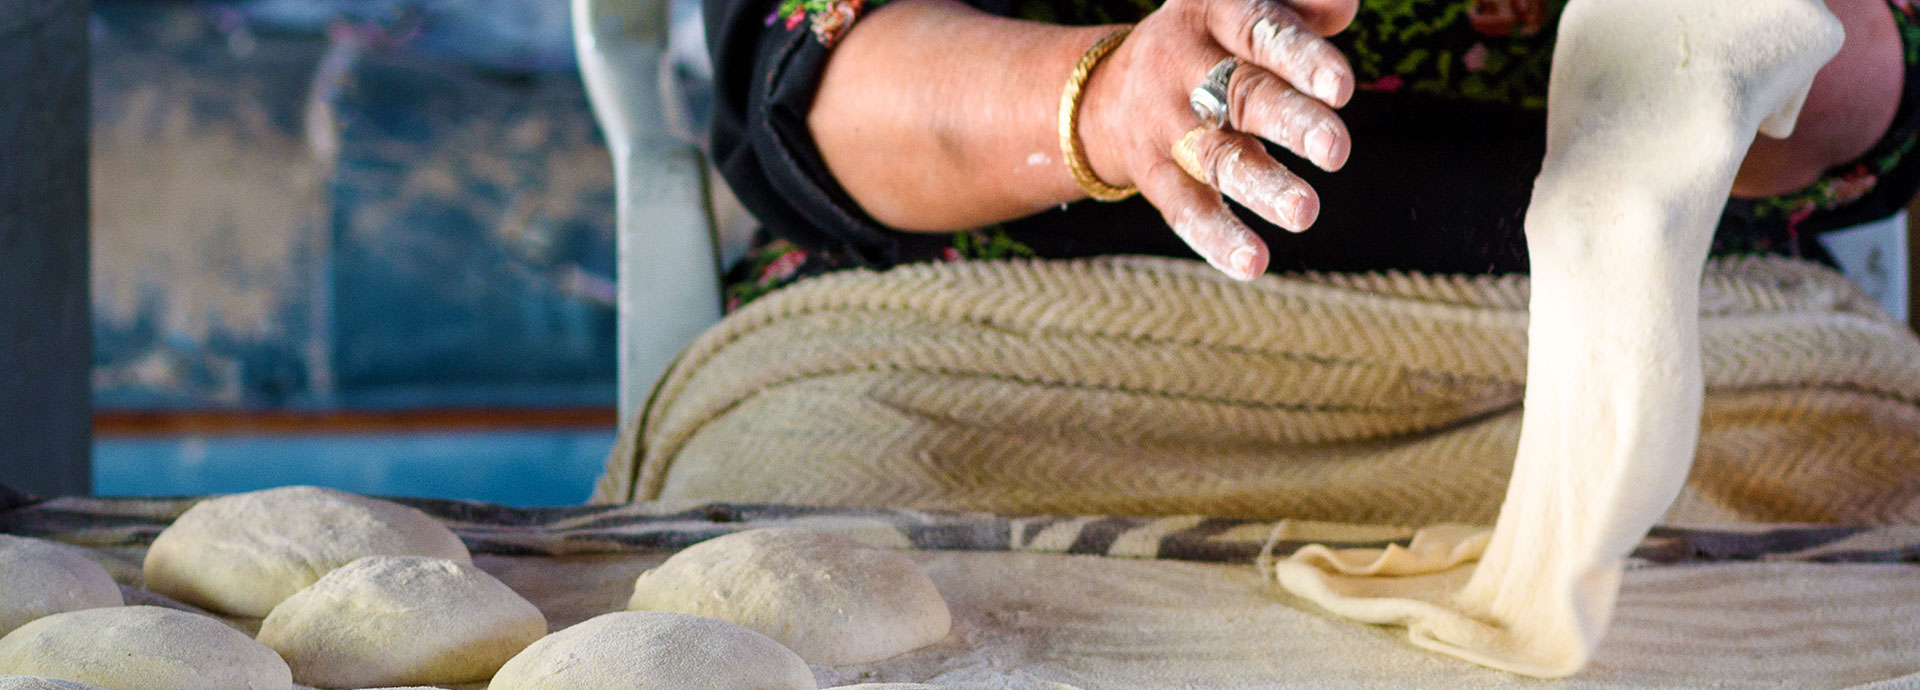 Old Arab women kneading fresh dough